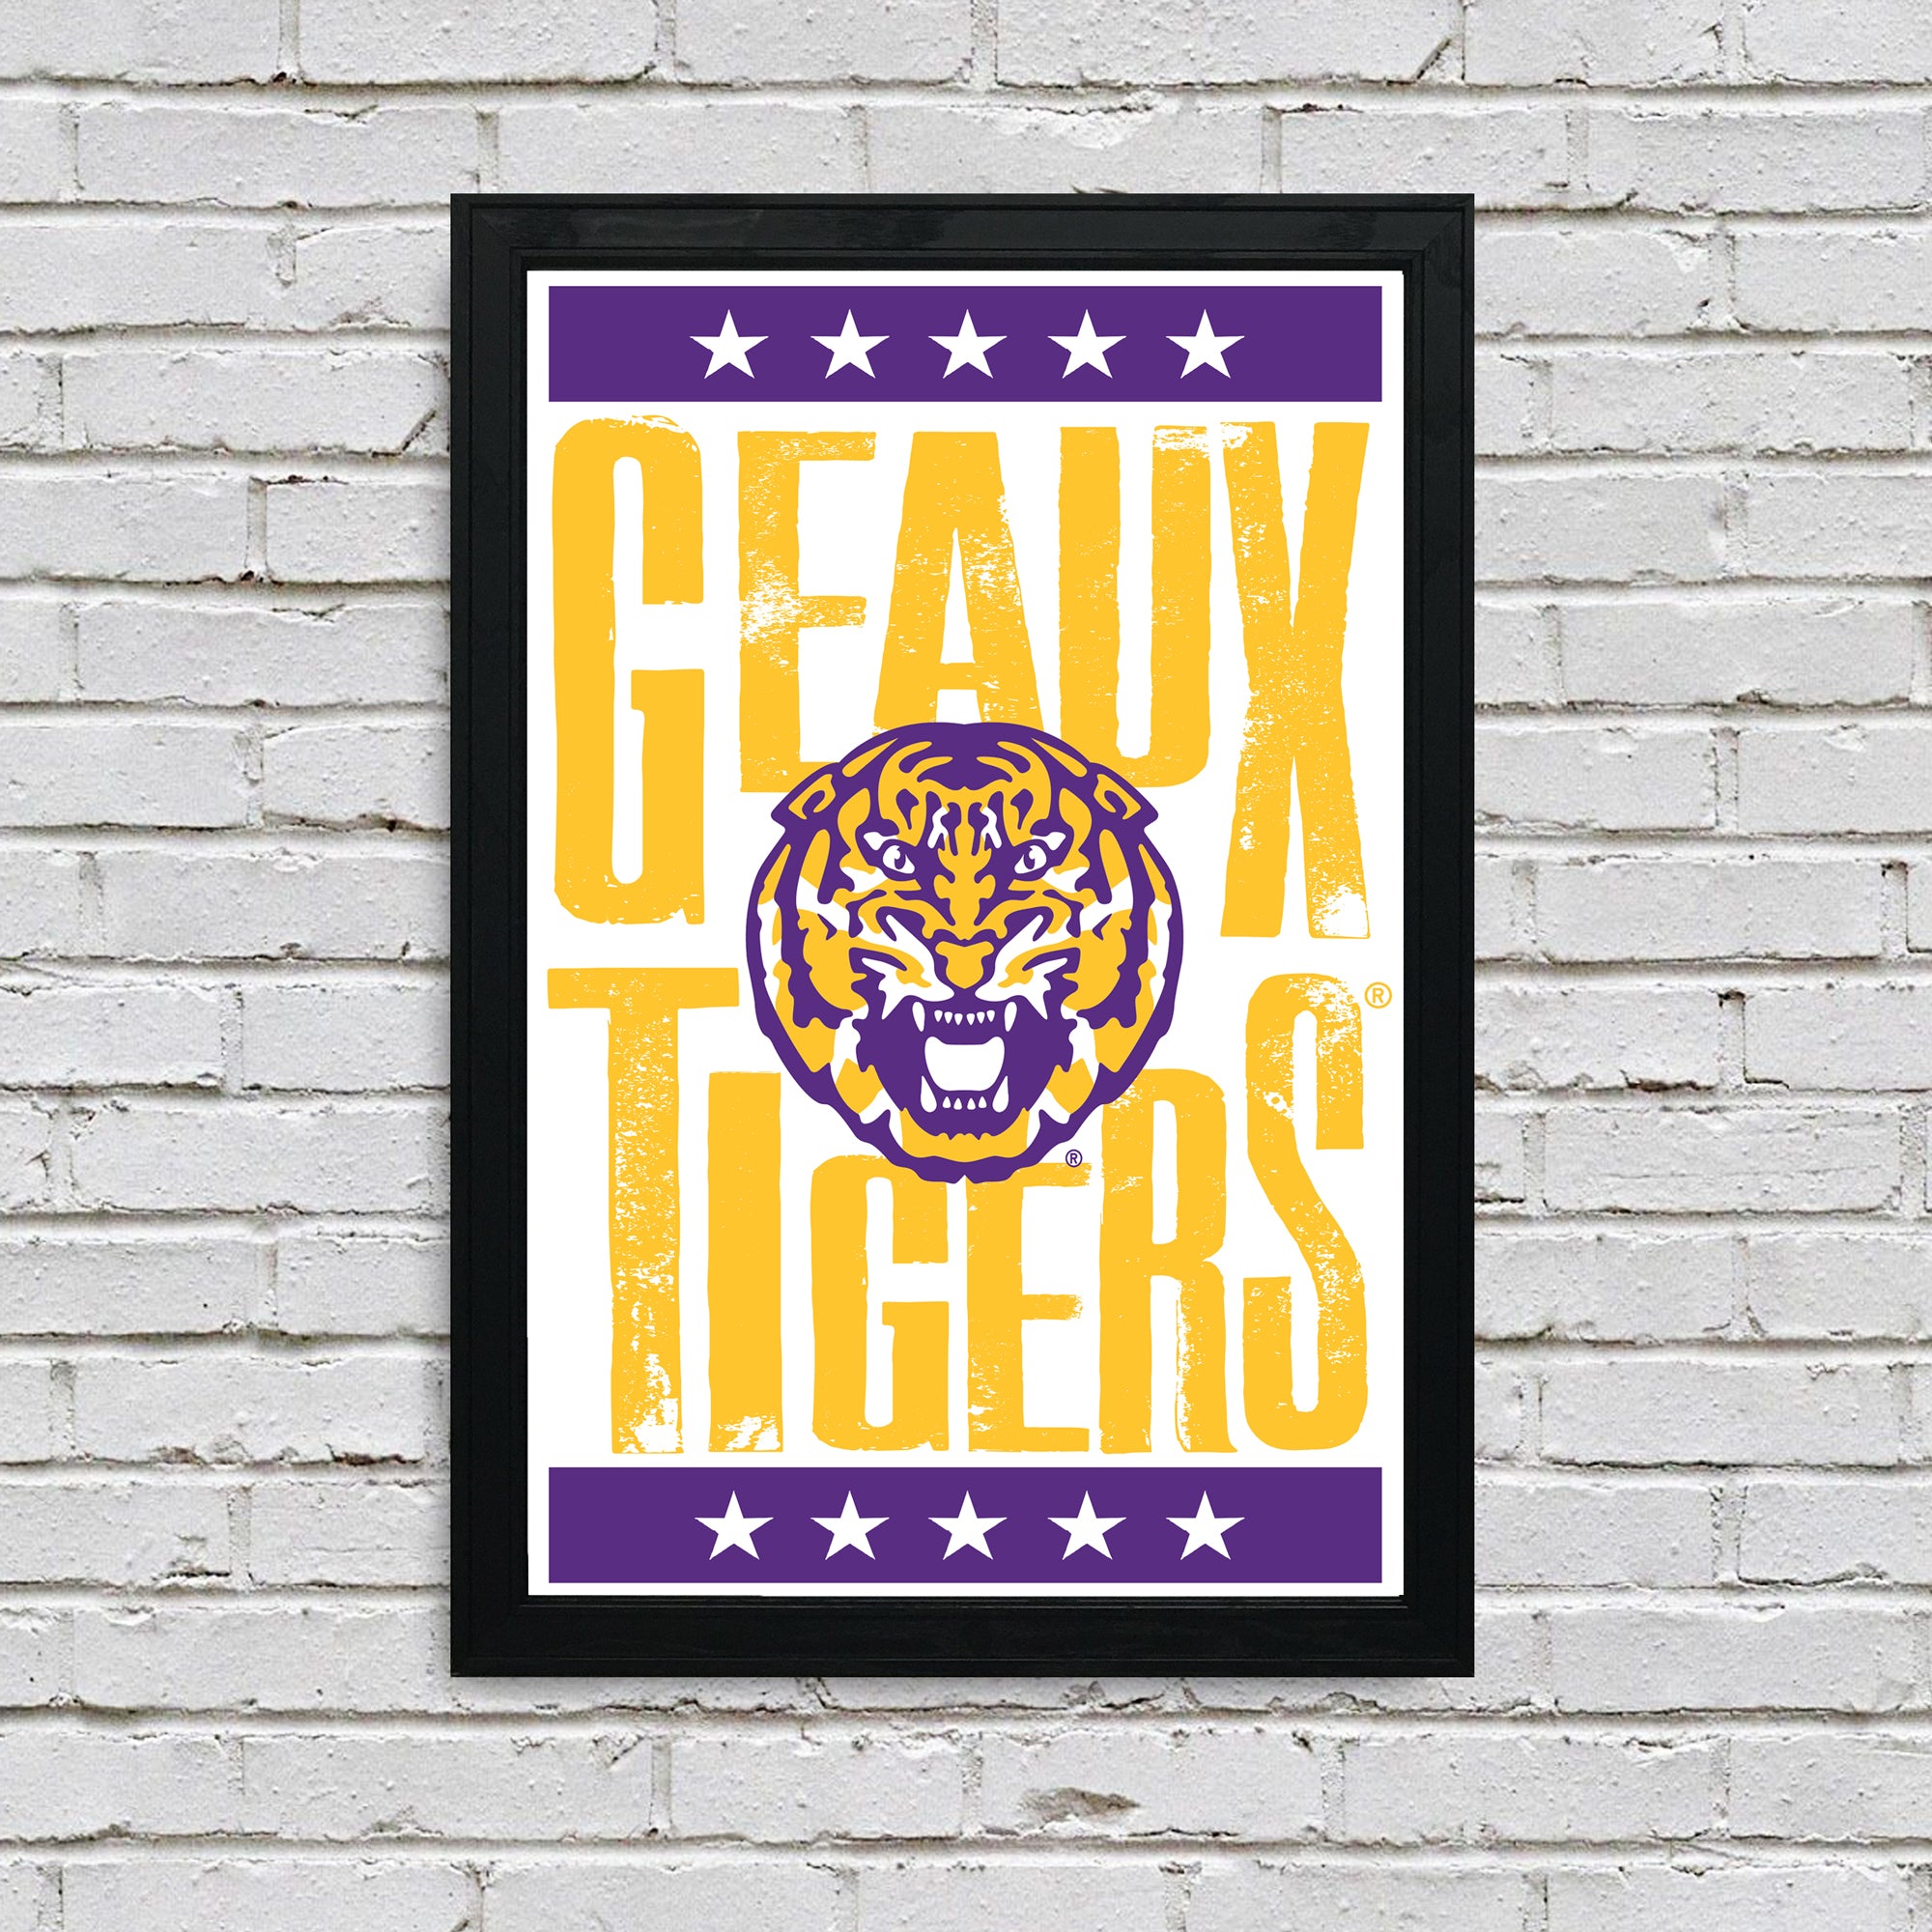 Limited Edition LSU Tigers Poster - Geaux Tigers Letterpress Art Print